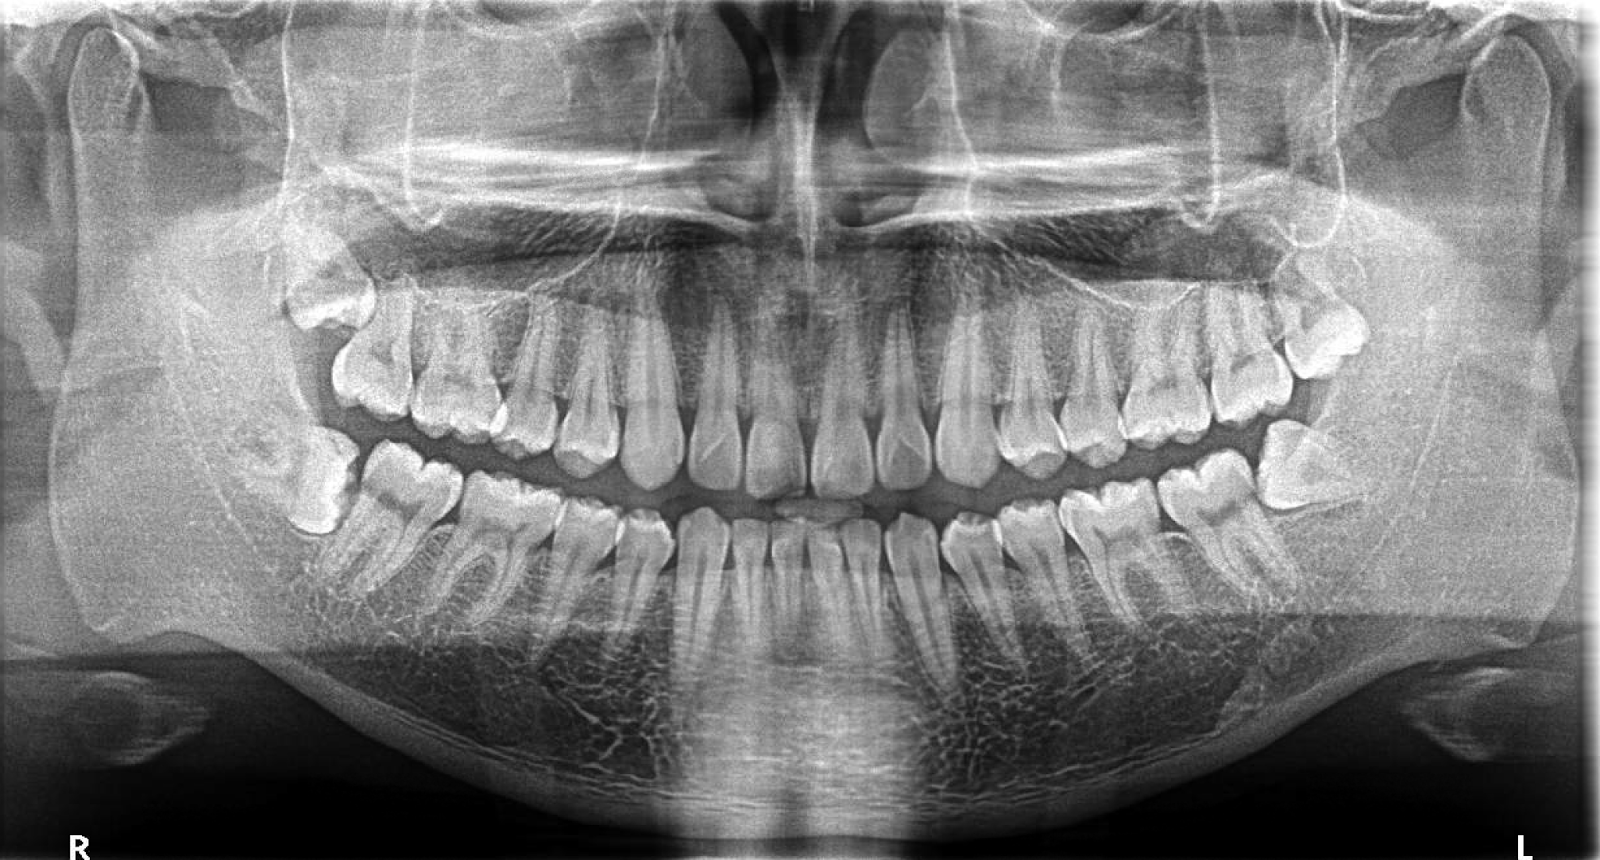 Wisdom Teeth are seen growing sideways. 